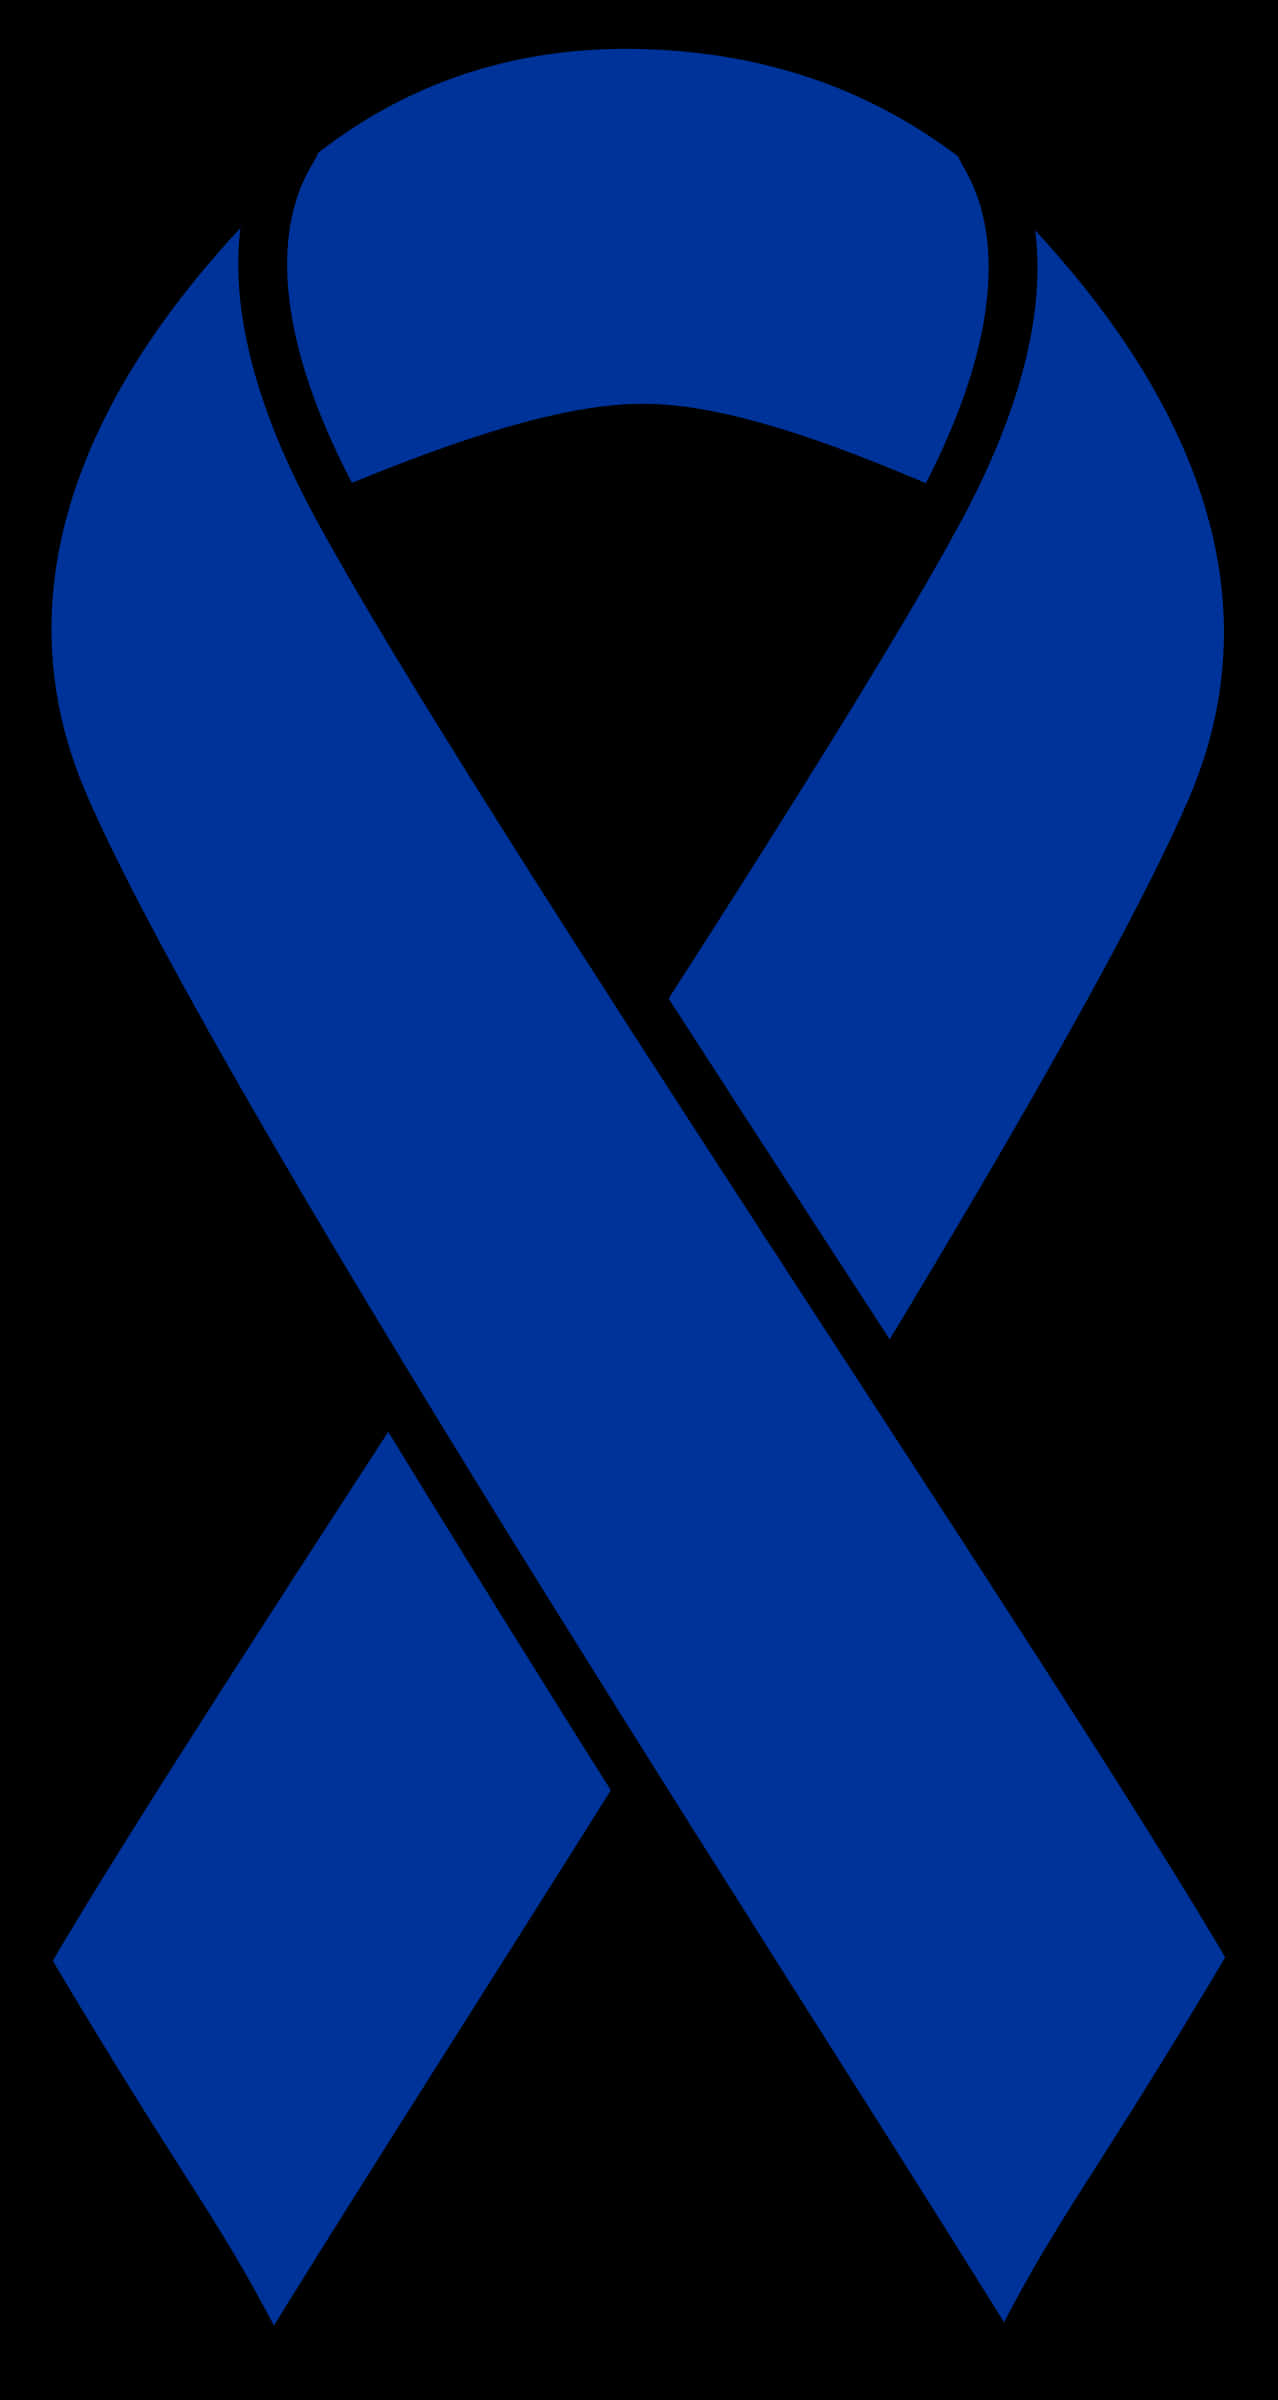 A Blue Ribbon On A Black Background